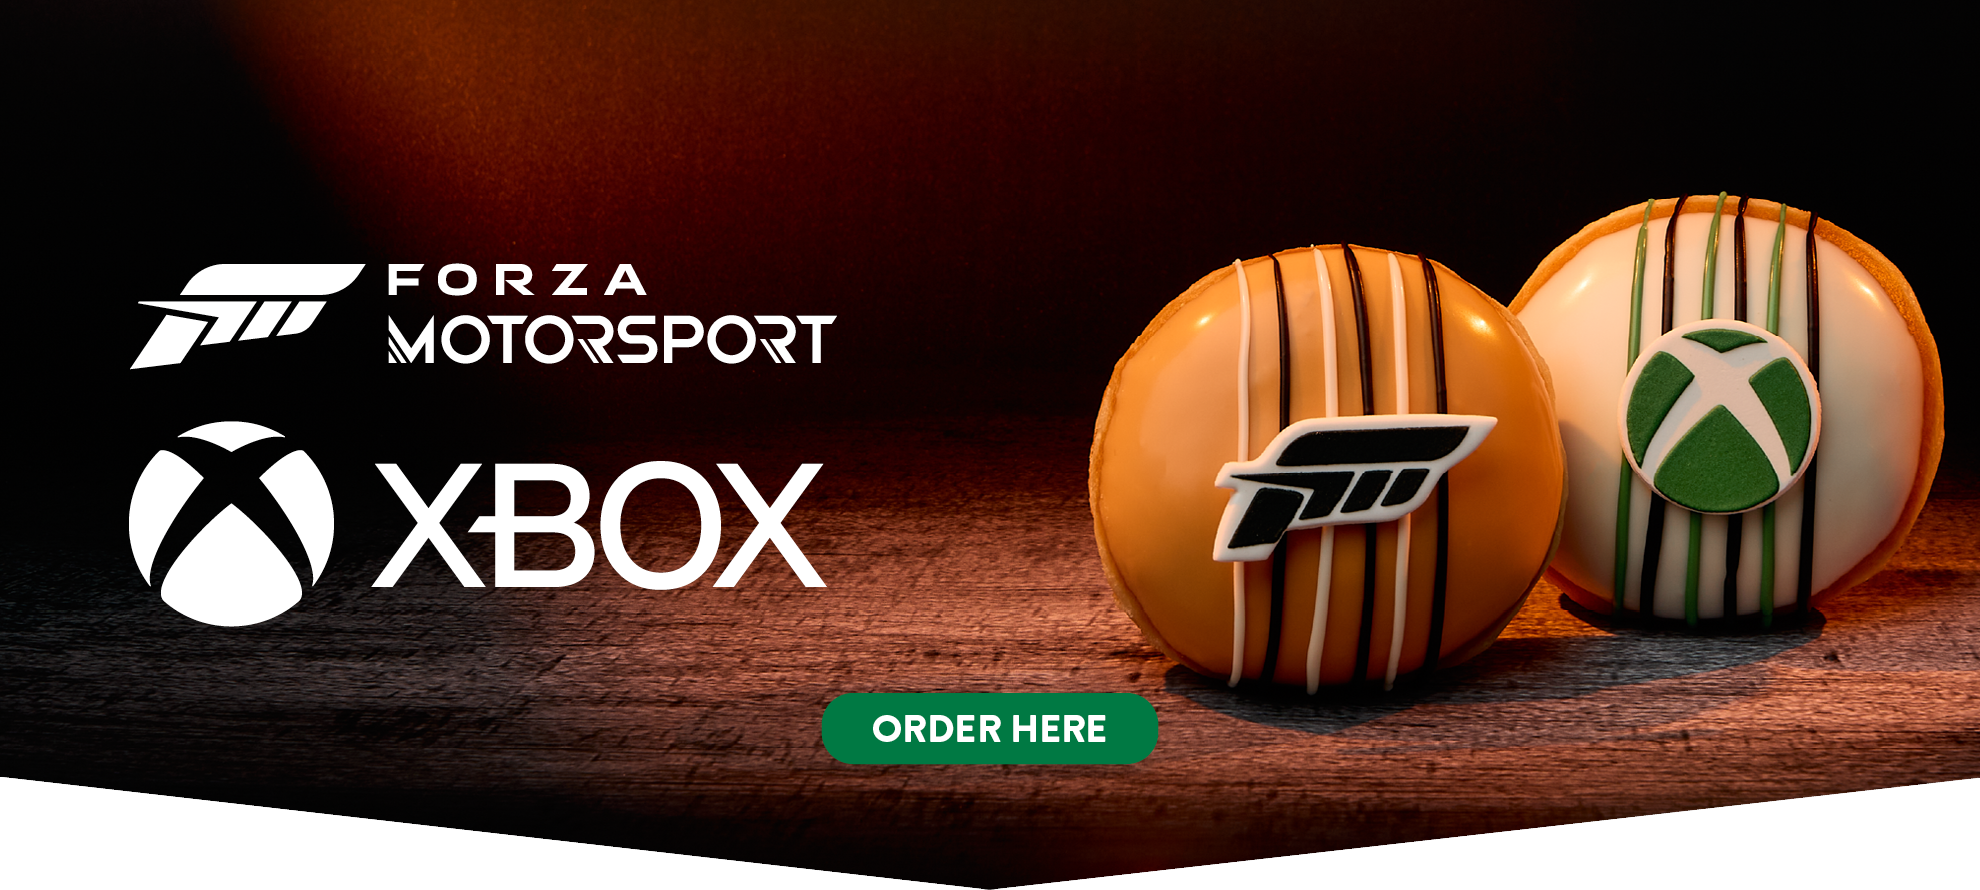 Krispy Kreme XBOX Forza Motorsport LTO - KK Website Banner 1980x890px FINAL